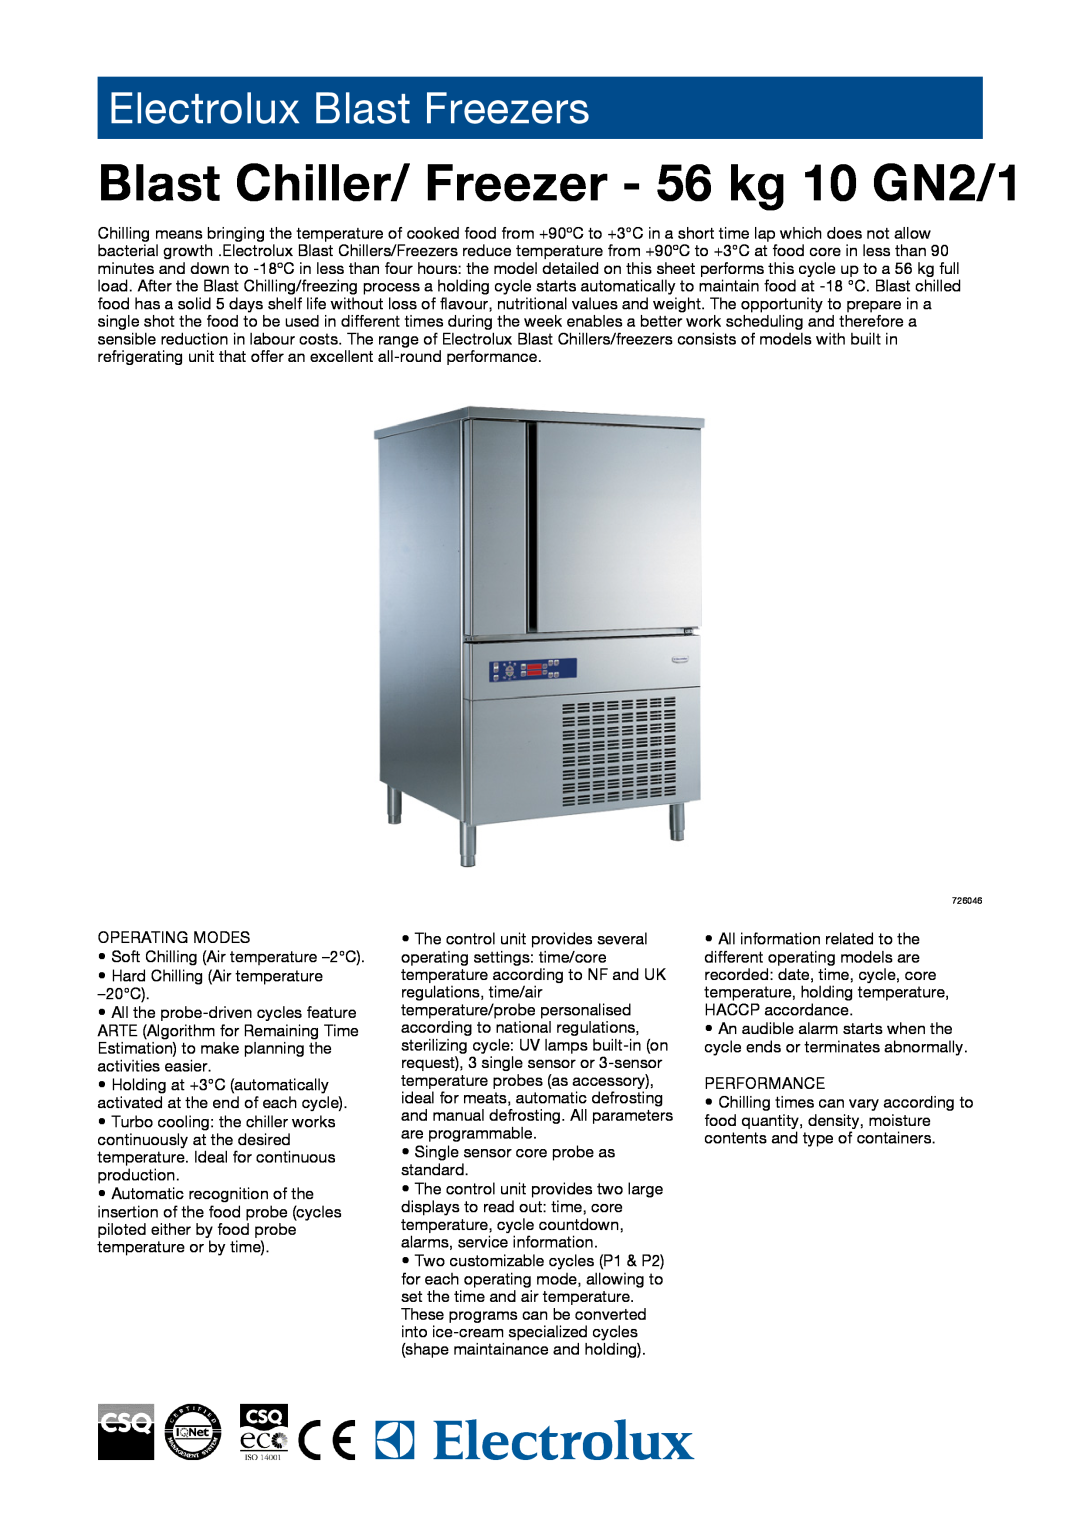 Electrolux manual Blast Chiller/ Freezer - 56 kg 10 GN2/1, Electrolux Blast Freezers 